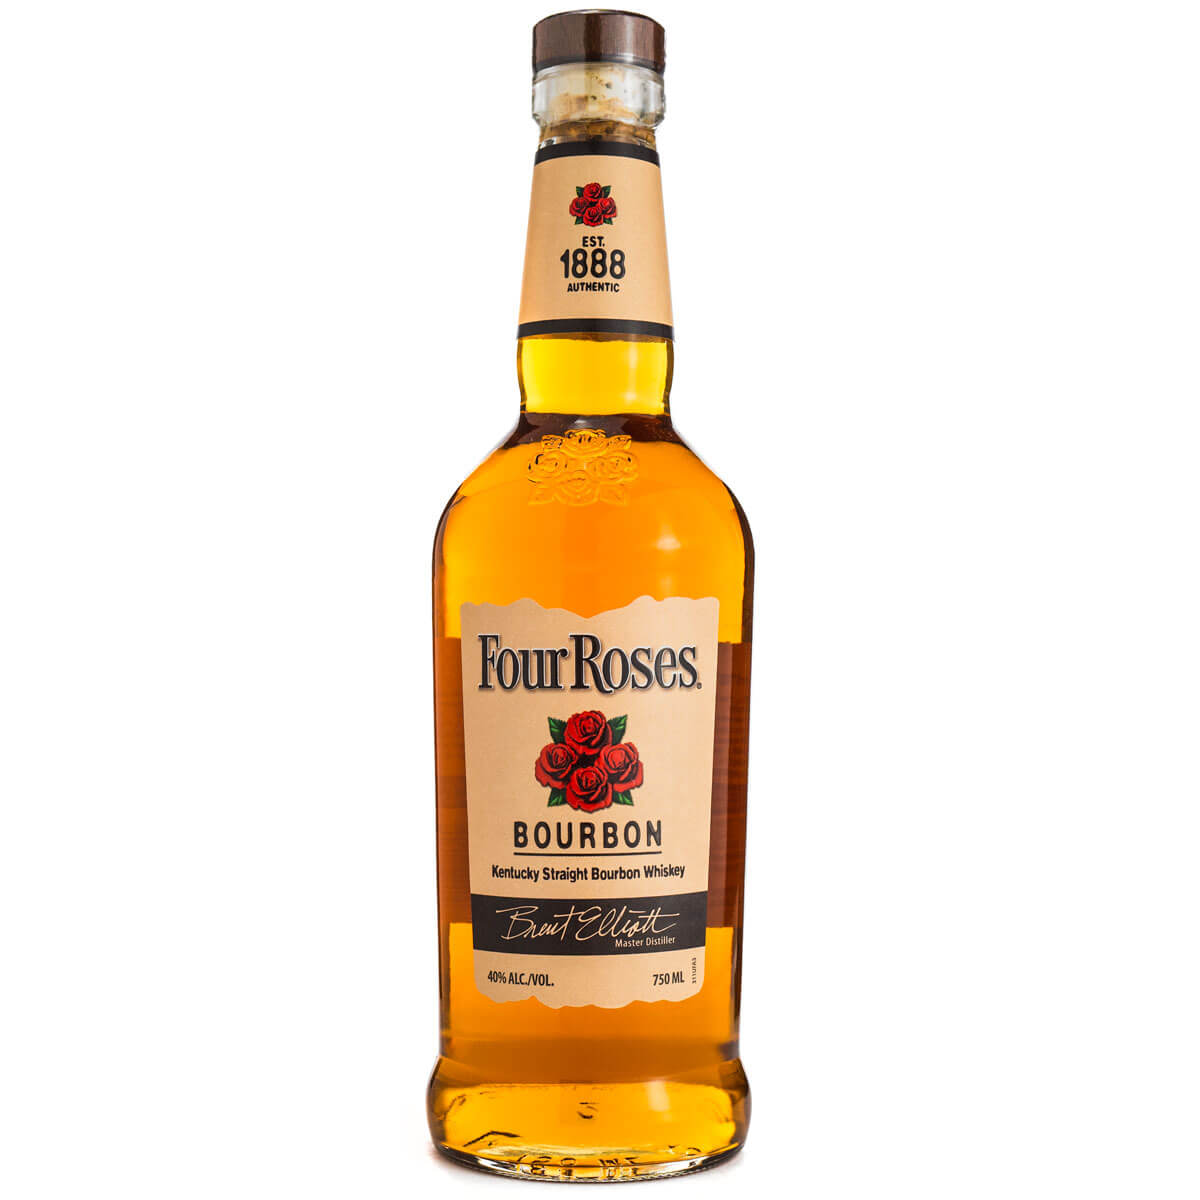 Four Roses Yellow Label Bourbon bottle